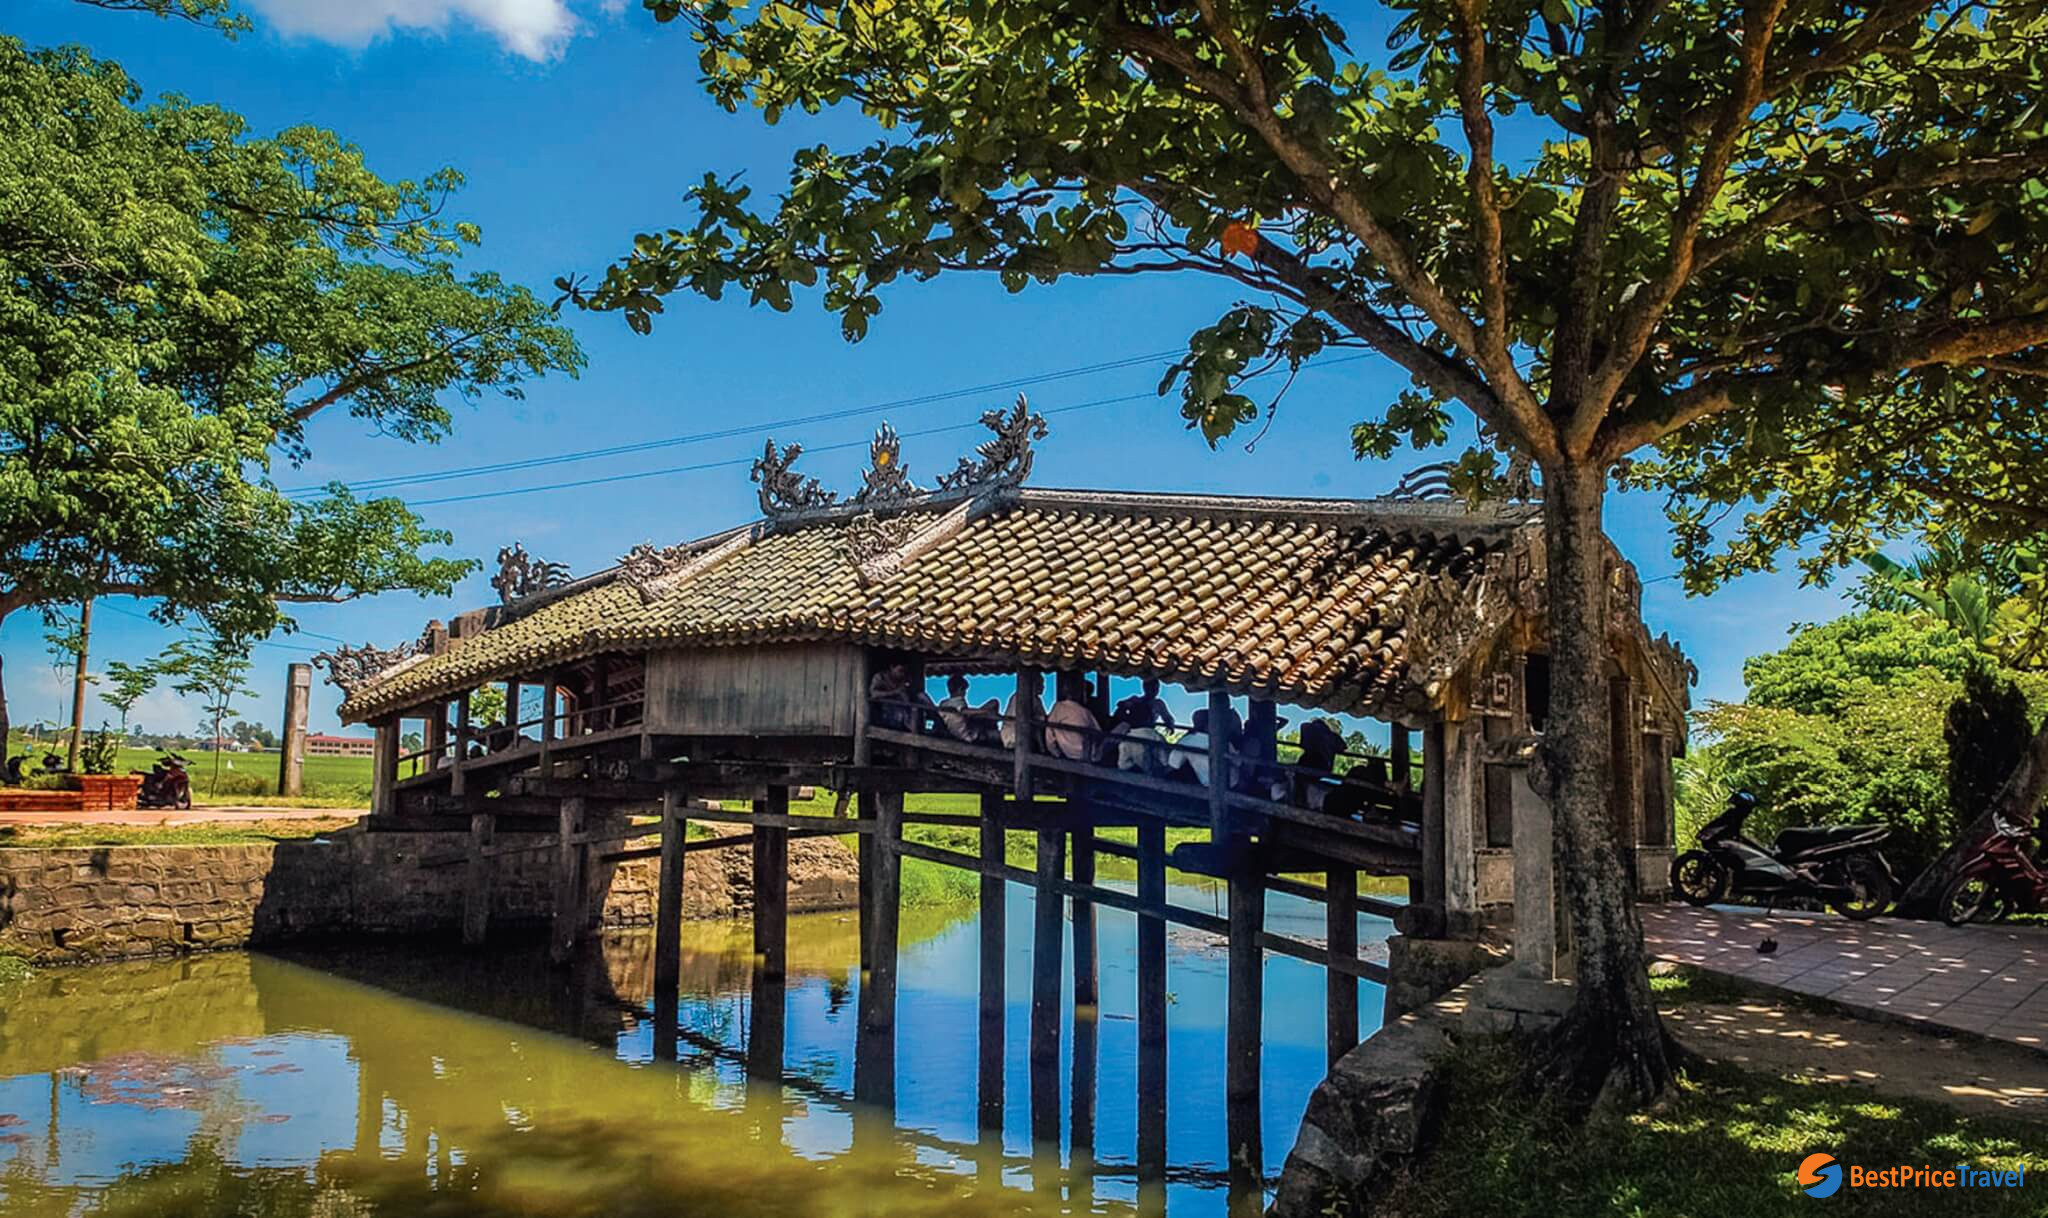 Thanh Toan Bridge